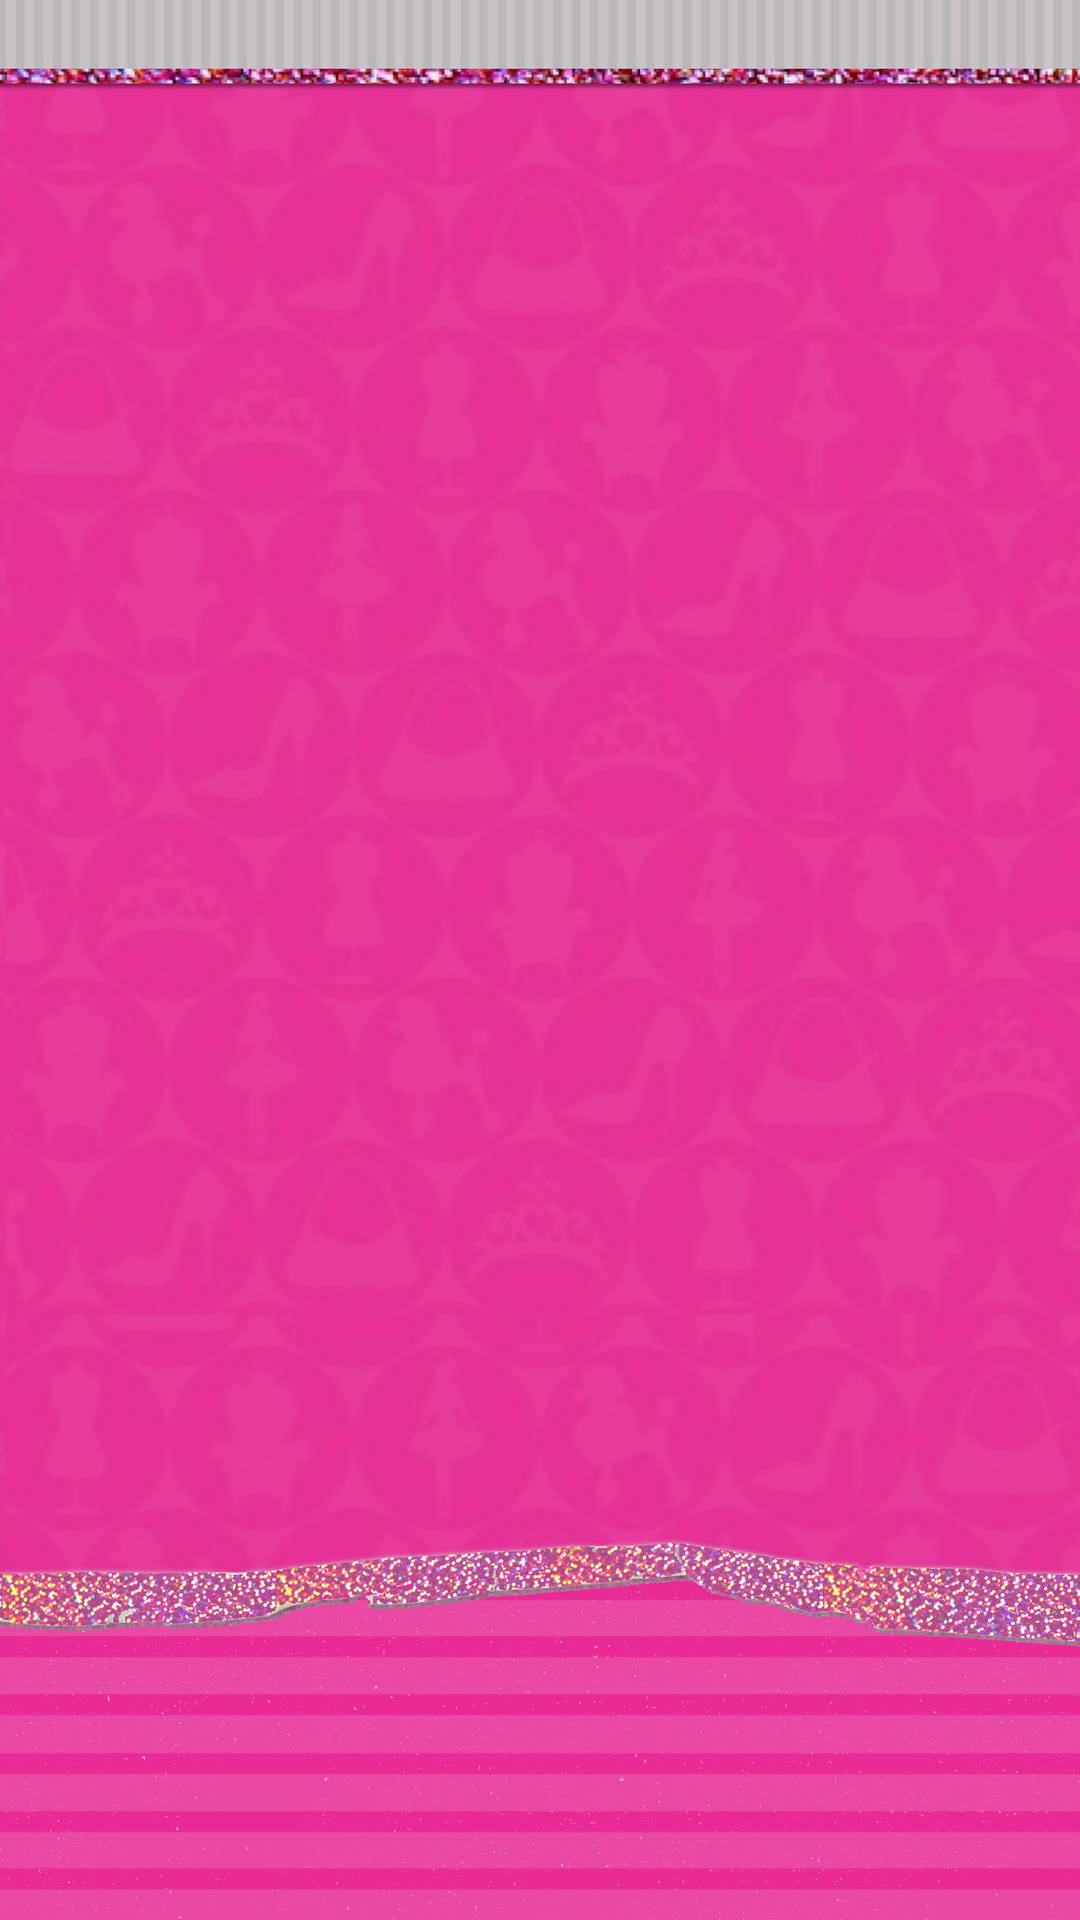 Pink Cute Girly Phone Screen Theme Background